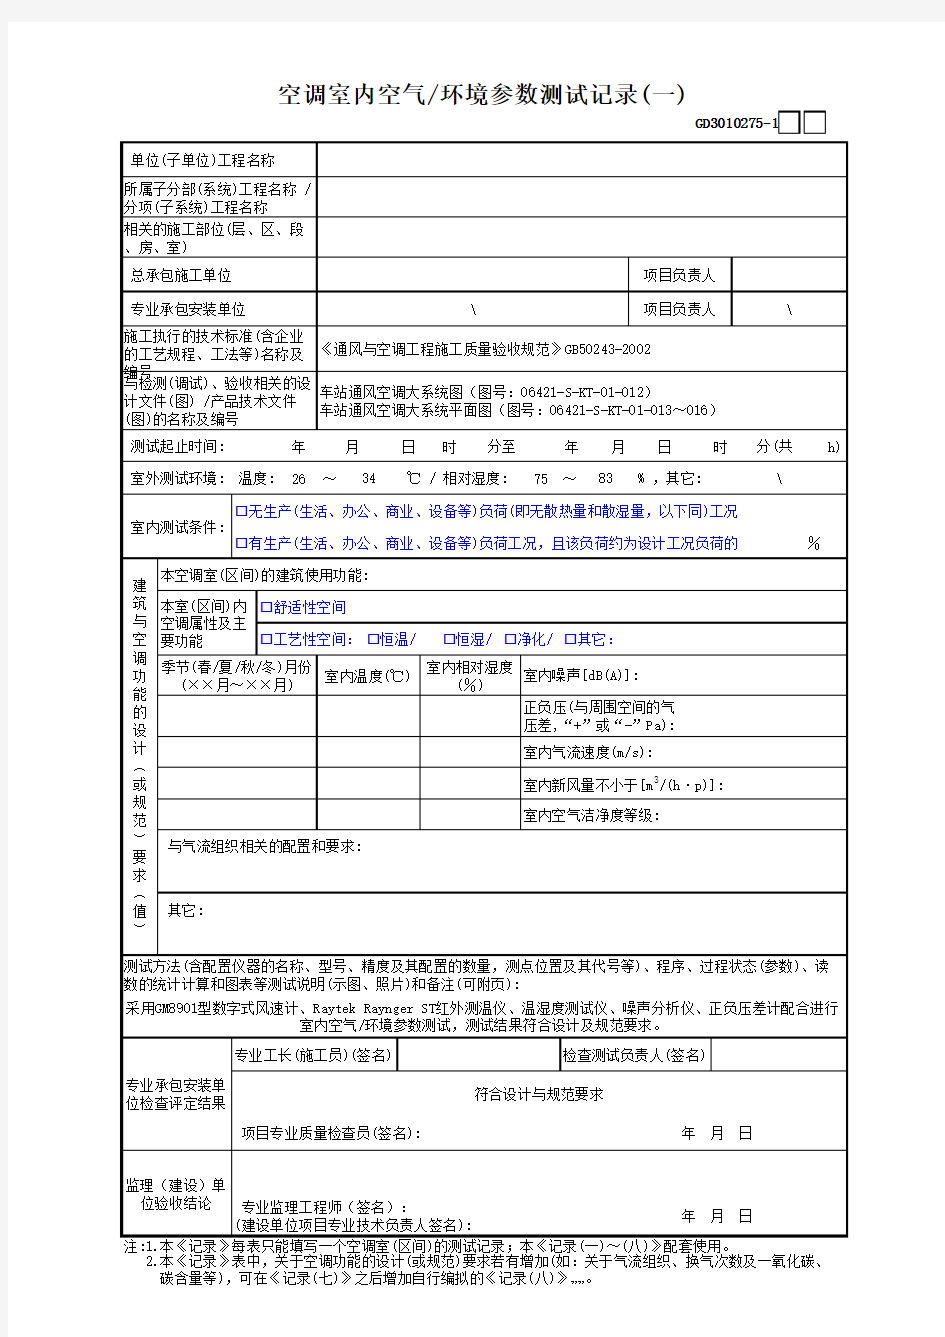 GD3010275-1空调室内空气环境参数测试记录(一)